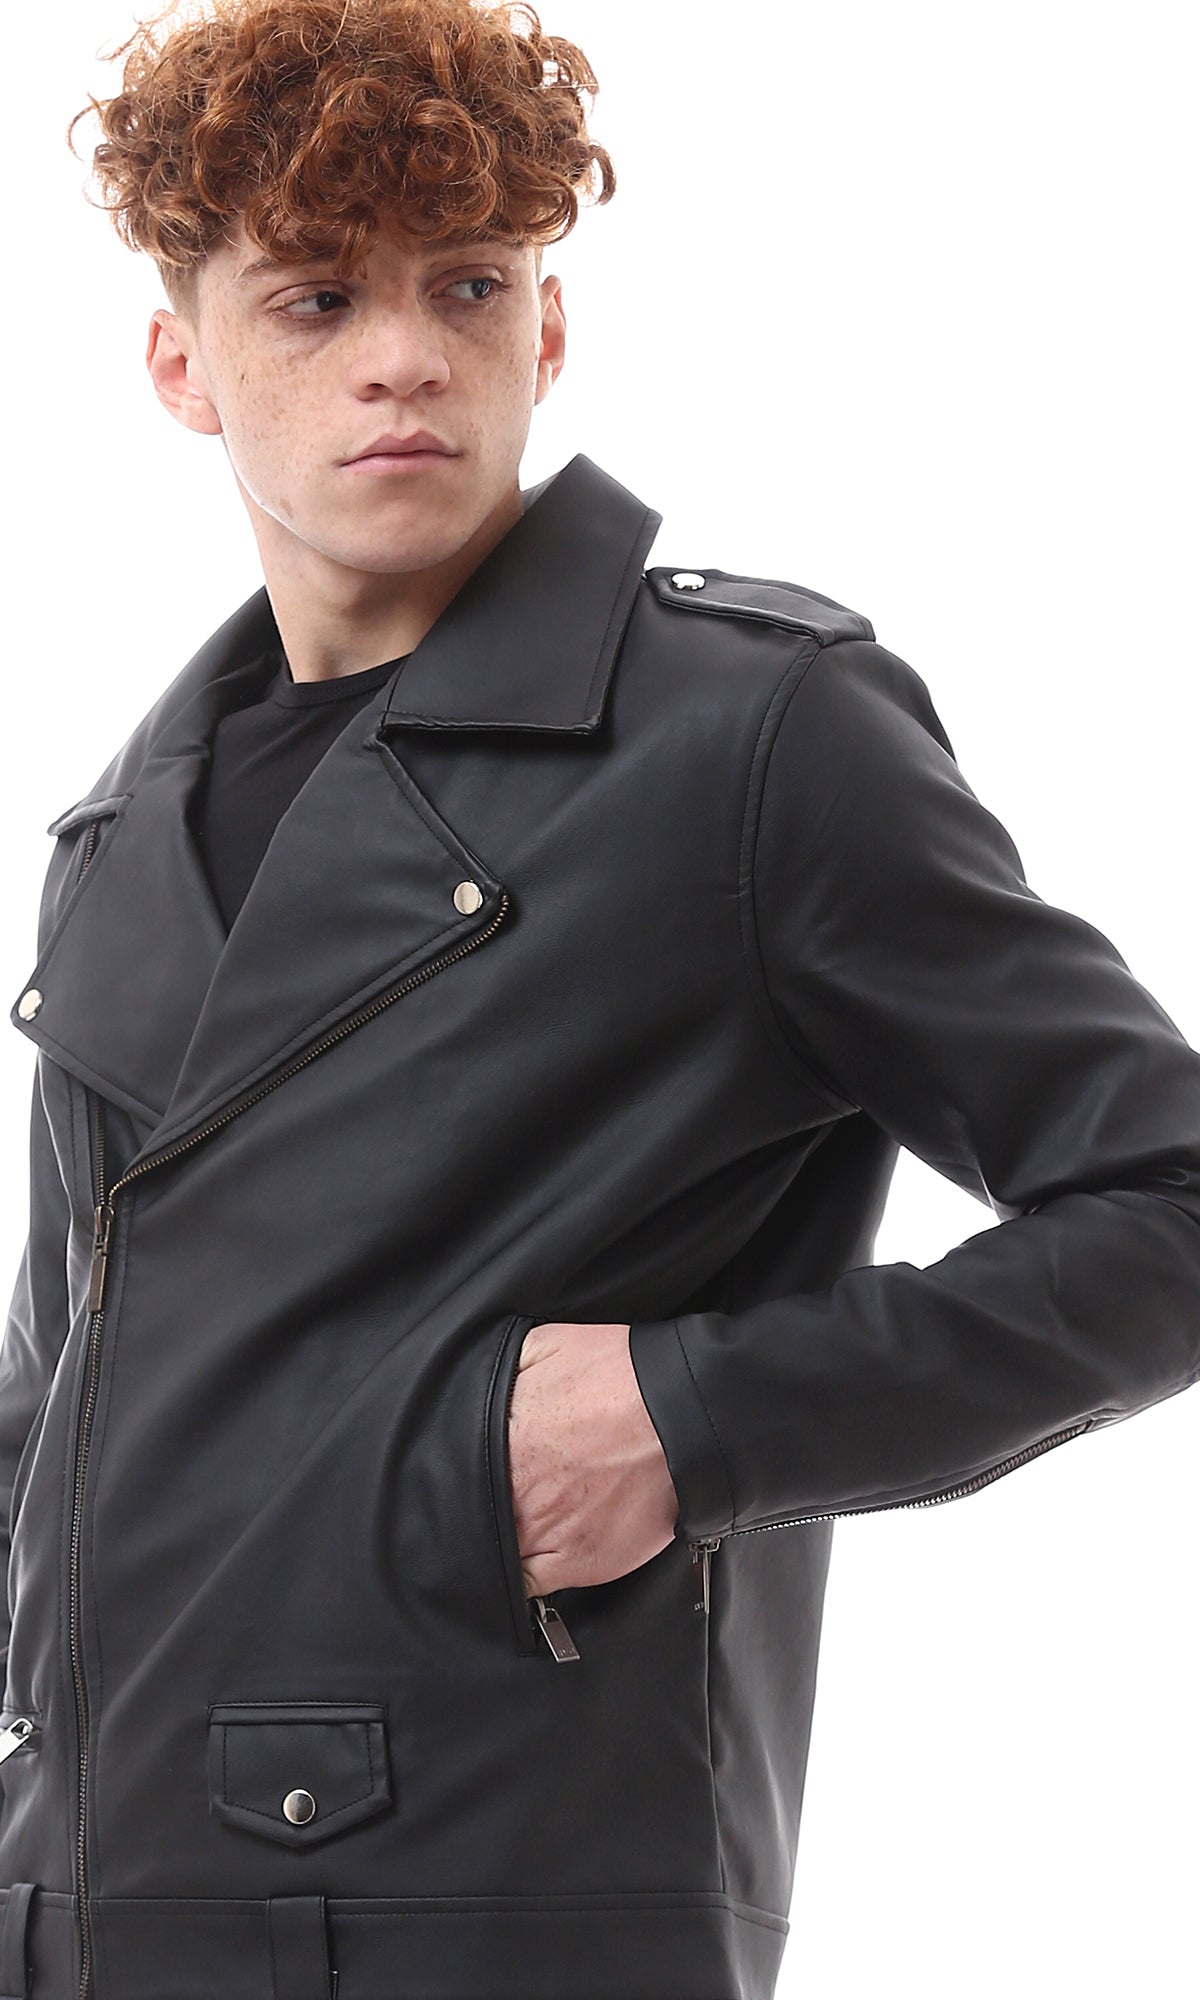 O173261 Textured Leather Zipped Black Biker Jacket